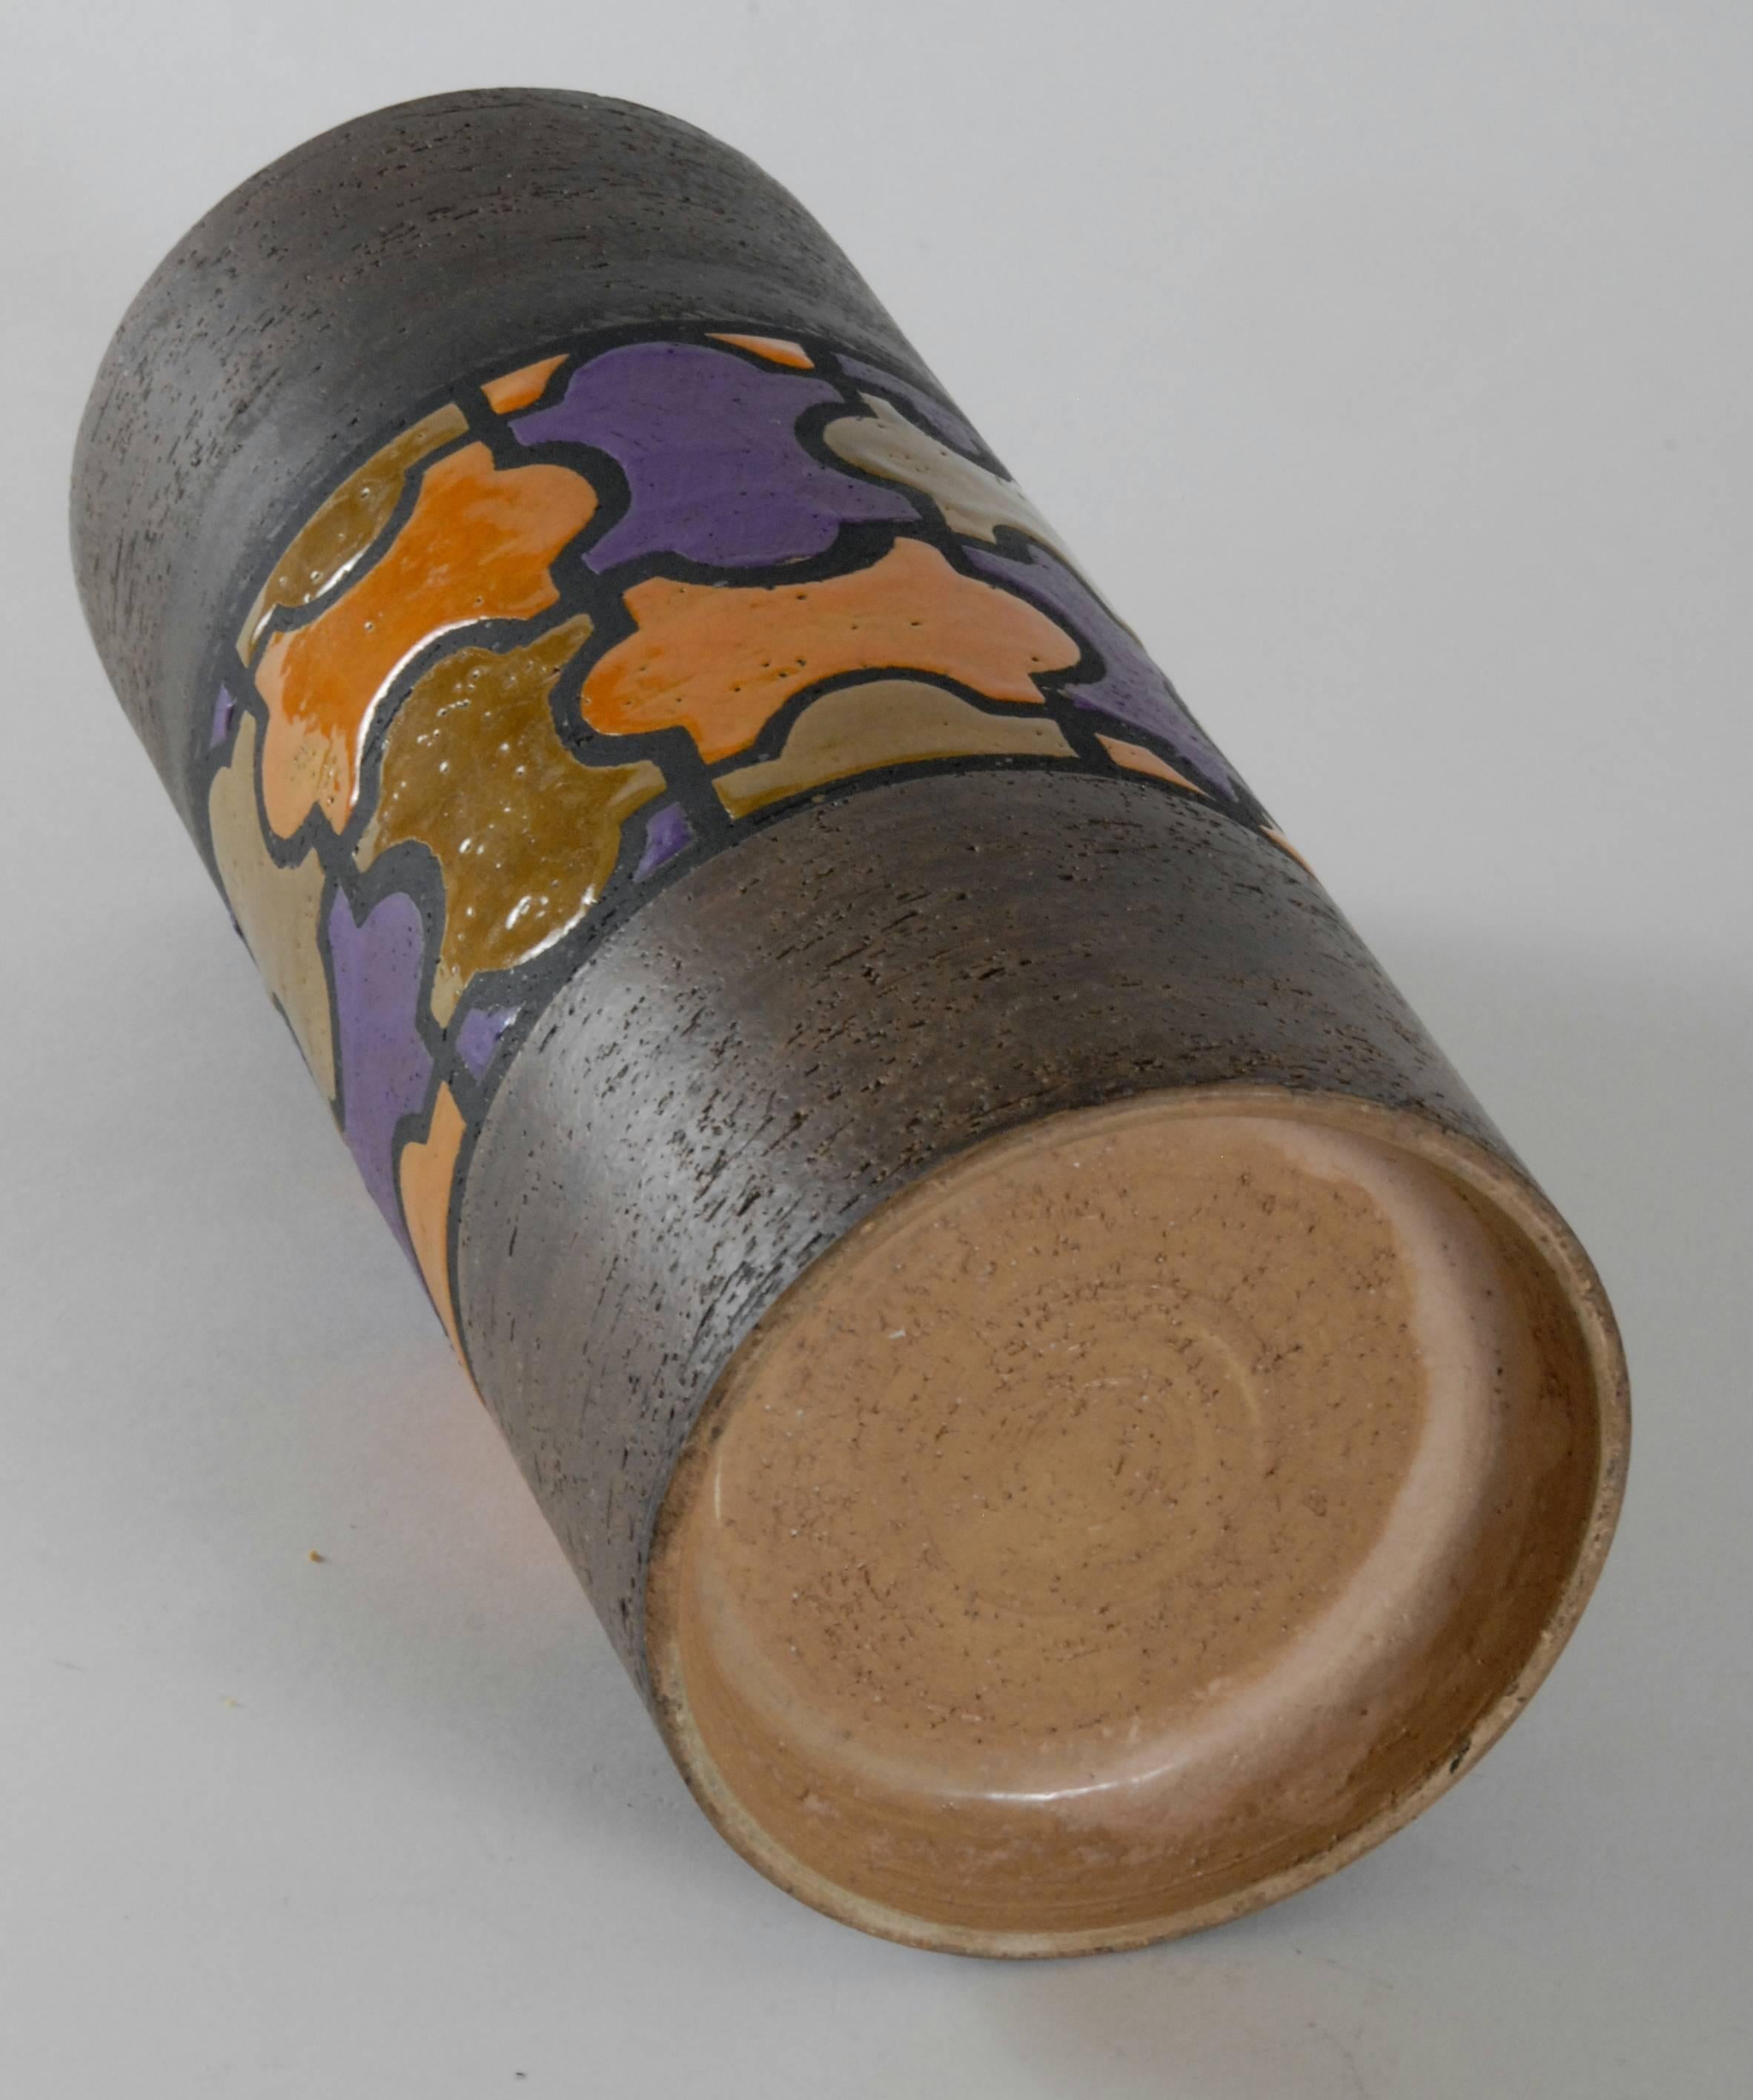 Hand-Crafted Bitossi Aldo Londi 'Jig Saw' Vase, Italy, circa 1965